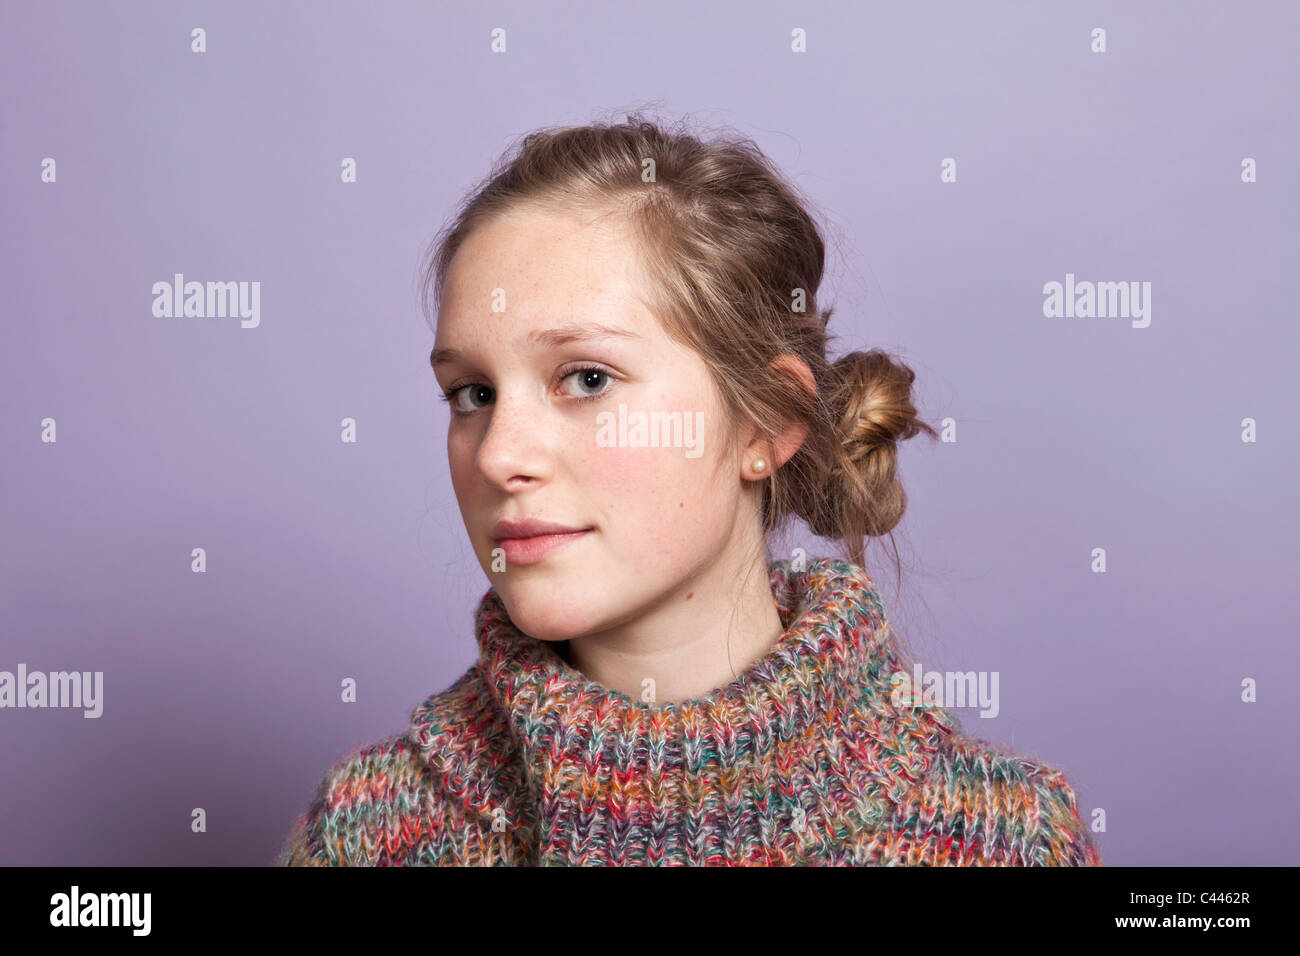 A teenage girl give a sideways glance to the camera, portrait, studio shot Stock Photo